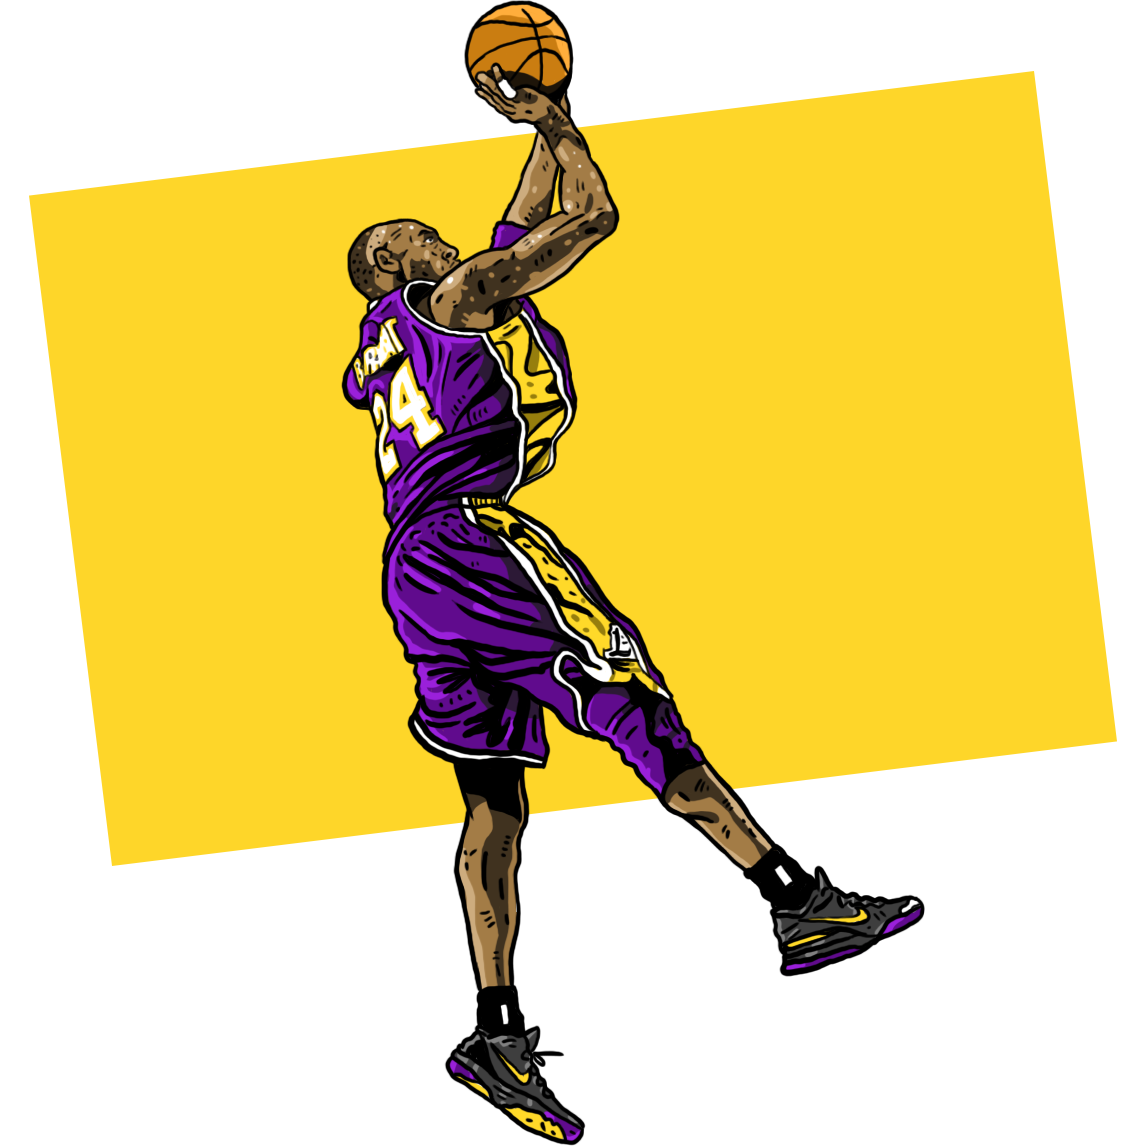 Illustration of Kobe Bryant wearing a purple #24 jersey making a jumper.